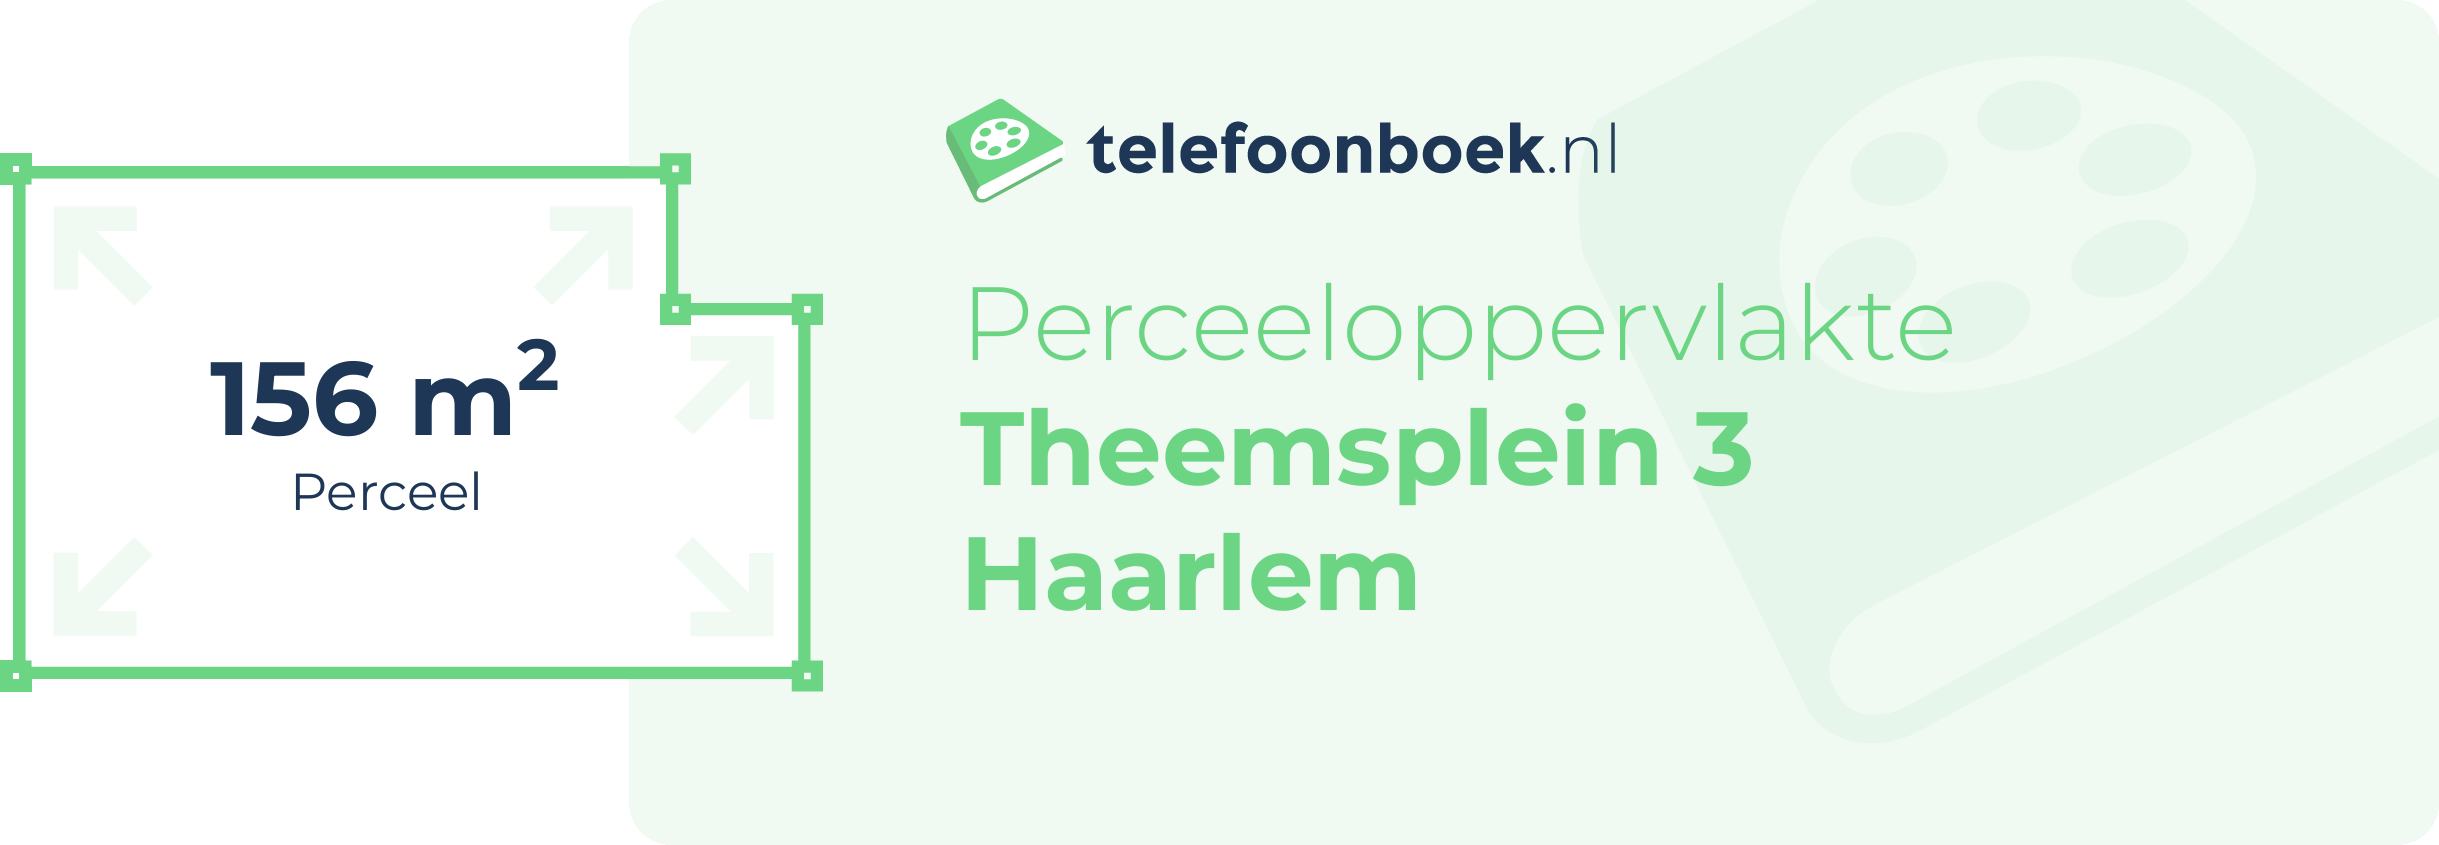 Perceeloppervlakte Theemsplein 3 Haarlem